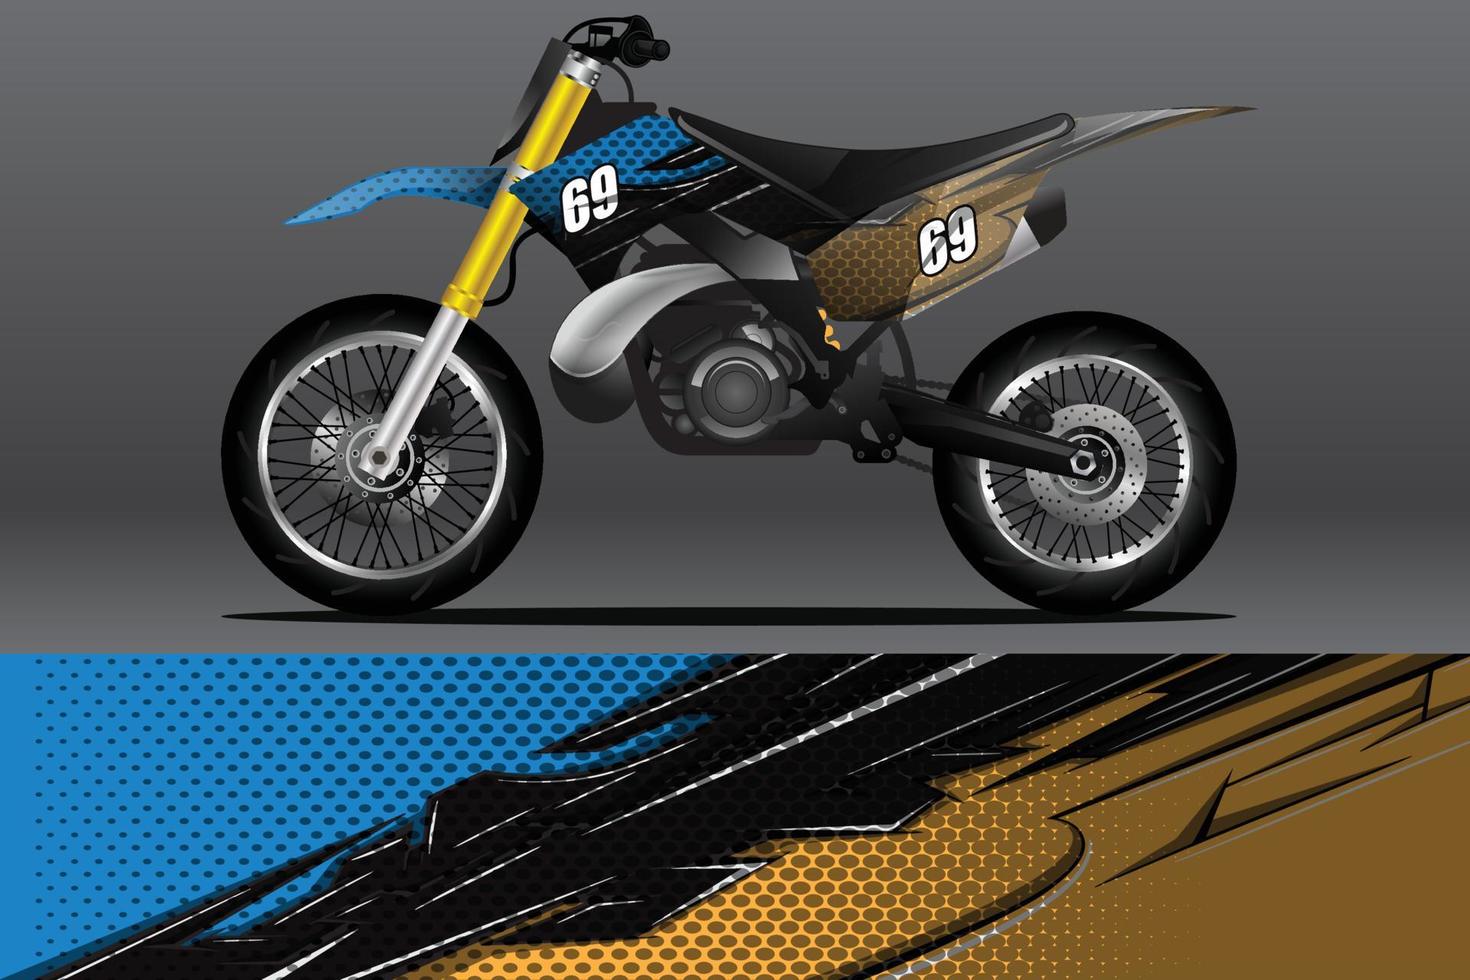 abstrakter Motorrad-Wrap-Aufkleber und Vinyl-Sticker-Design vektor